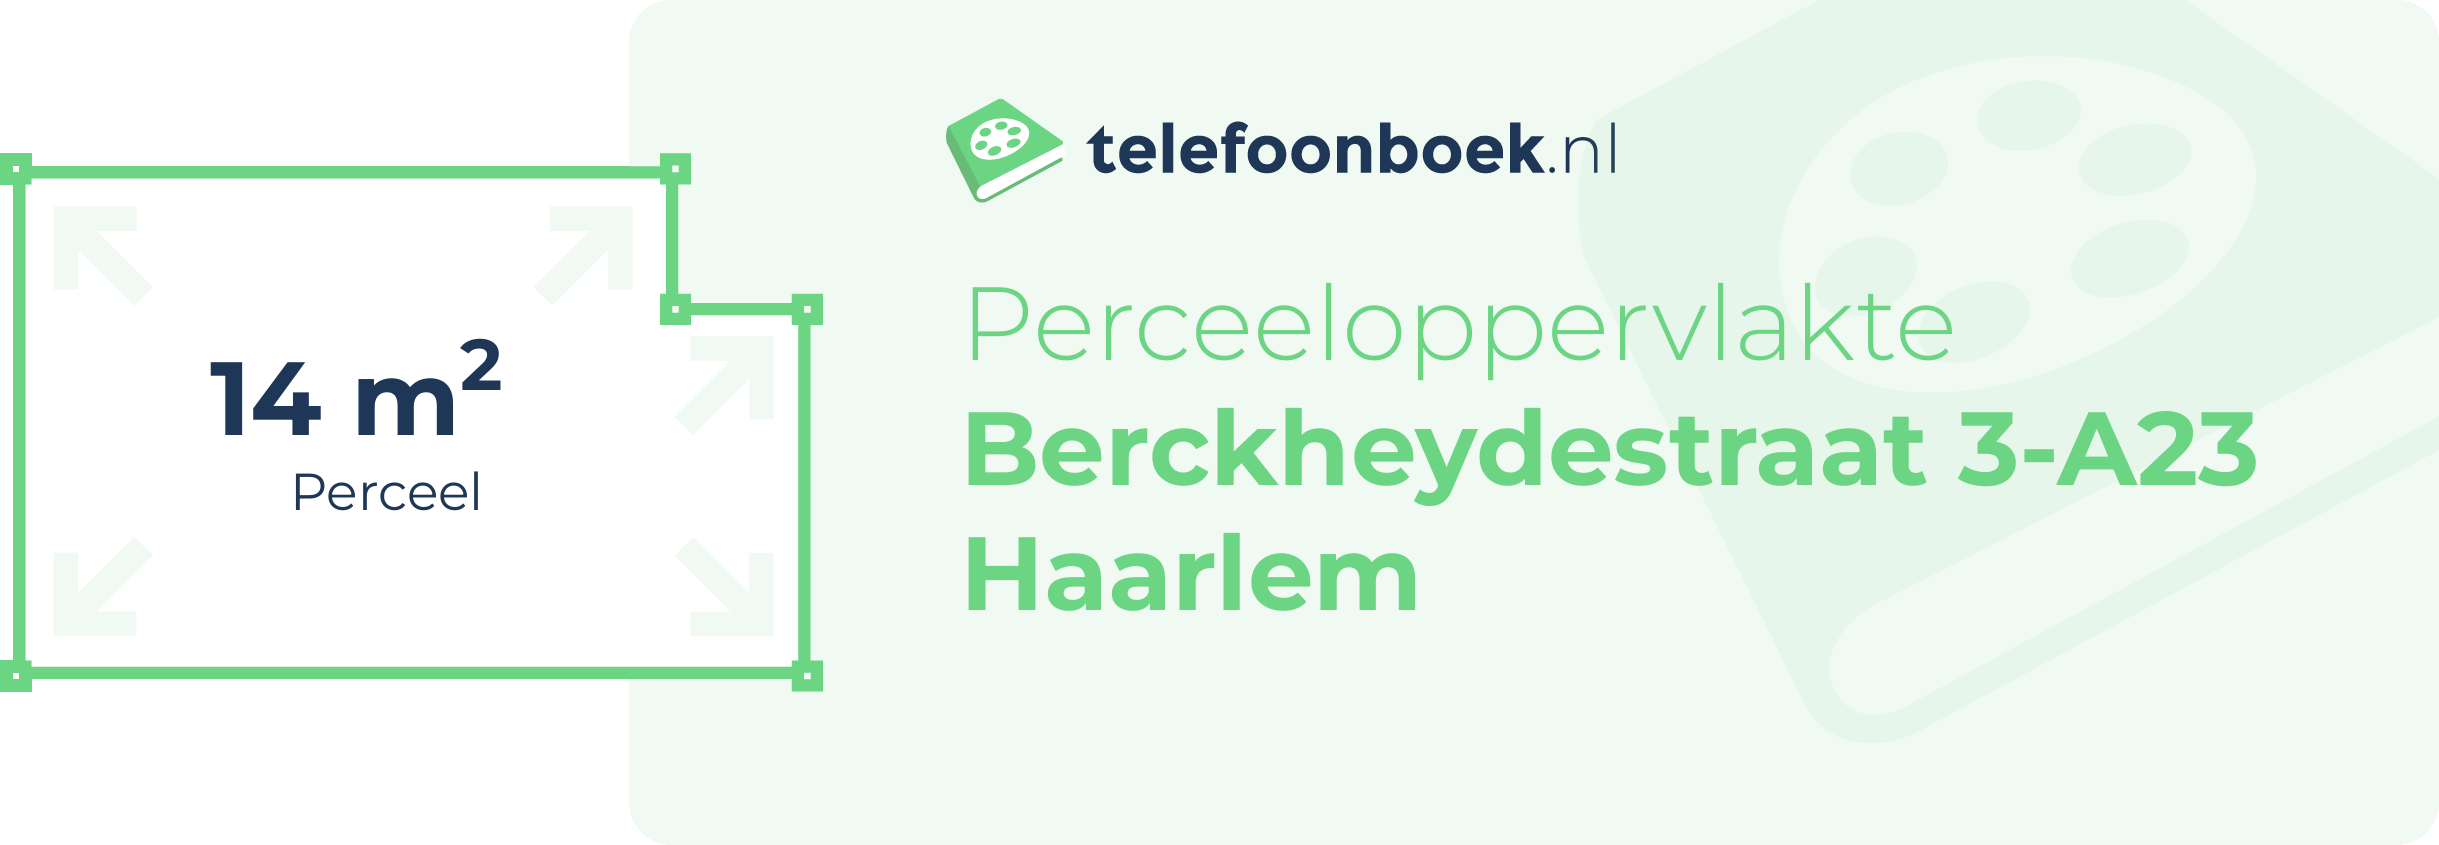 Perceeloppervlakte Berckheydestraat 3-A23 Haarlem